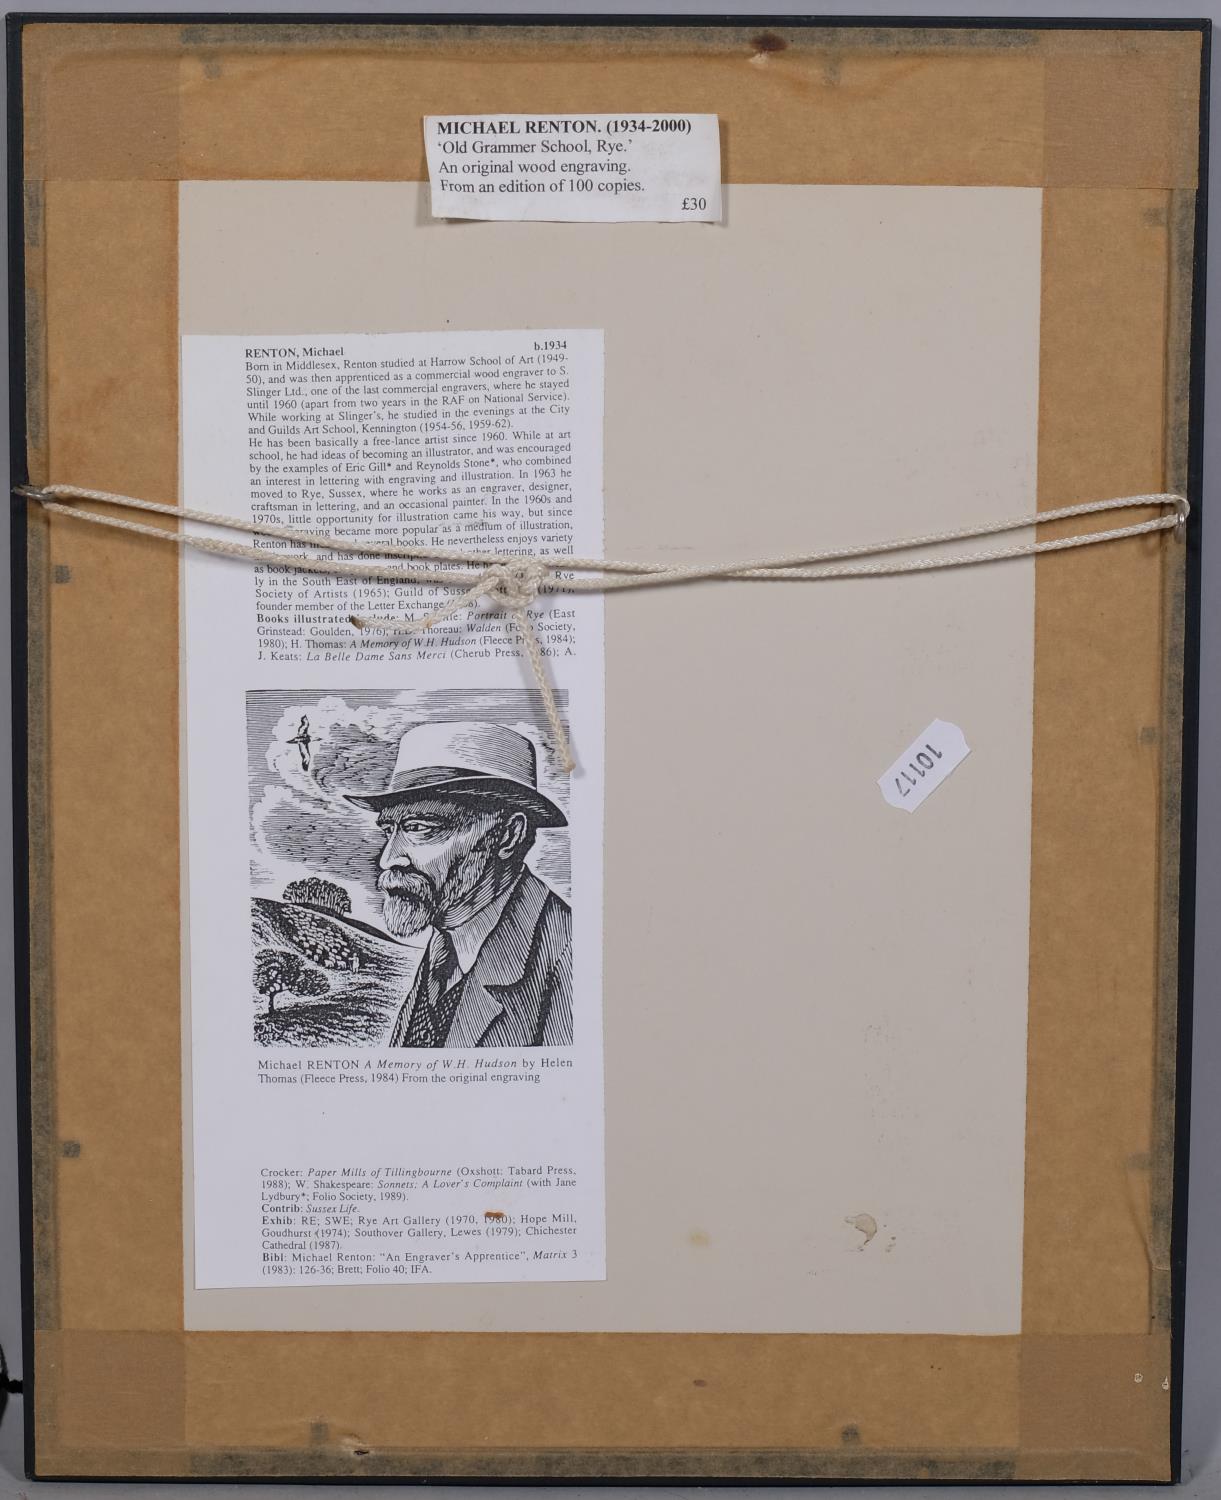 Michael Renton (1934 - 2000), Old Grammar School Rye, wood engraving, image 16cm x 10cm, framed Good - Image 4 of 4